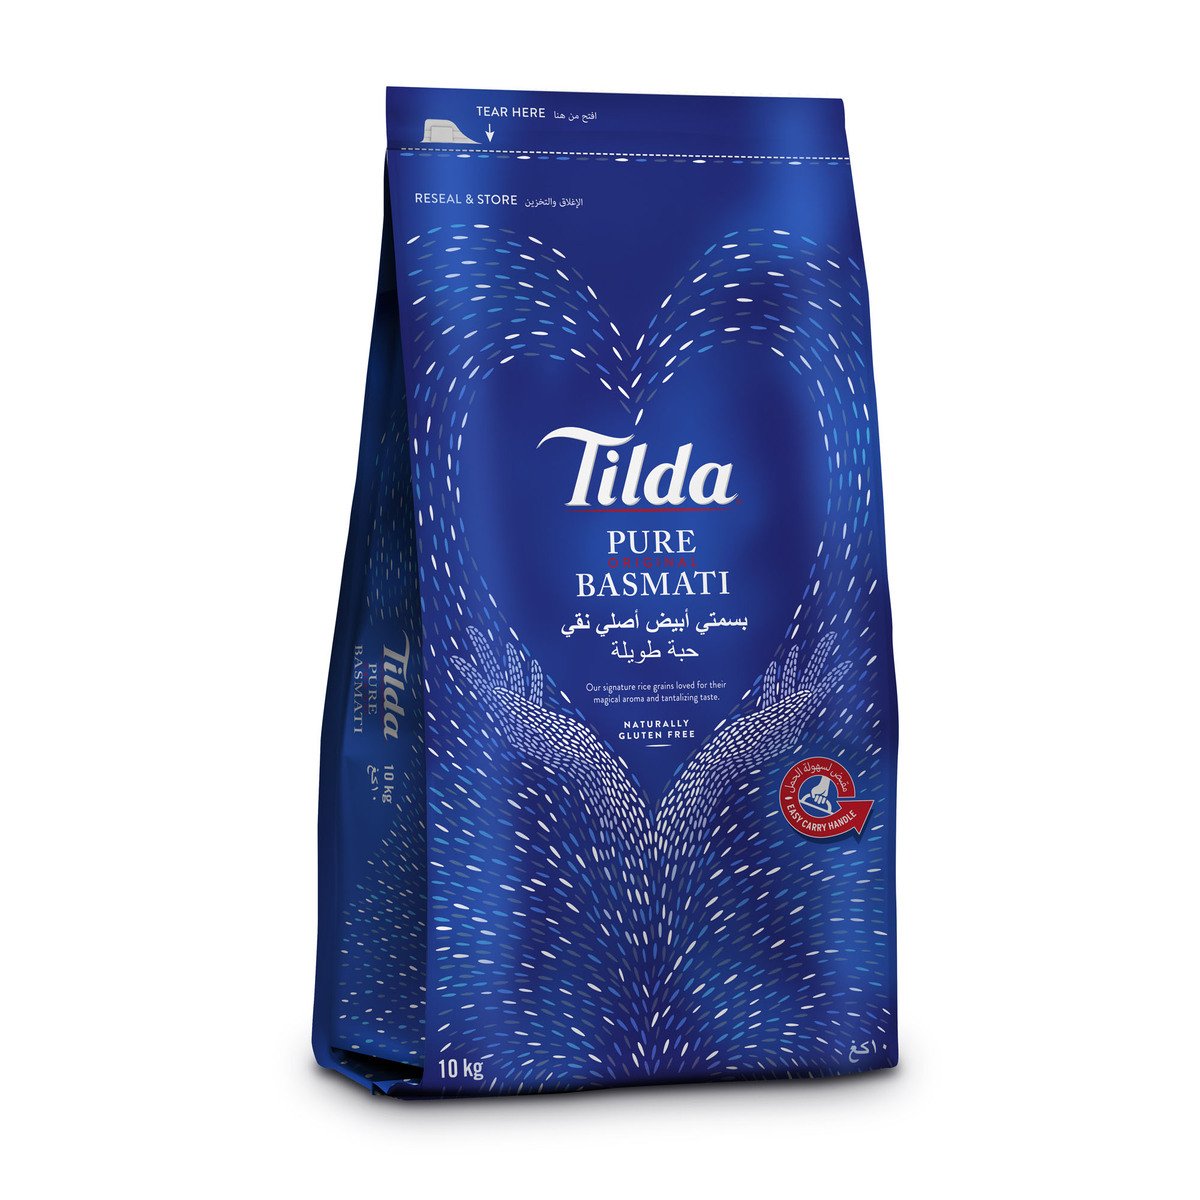 Tilda Pure Original Basmati Rice 10 kg